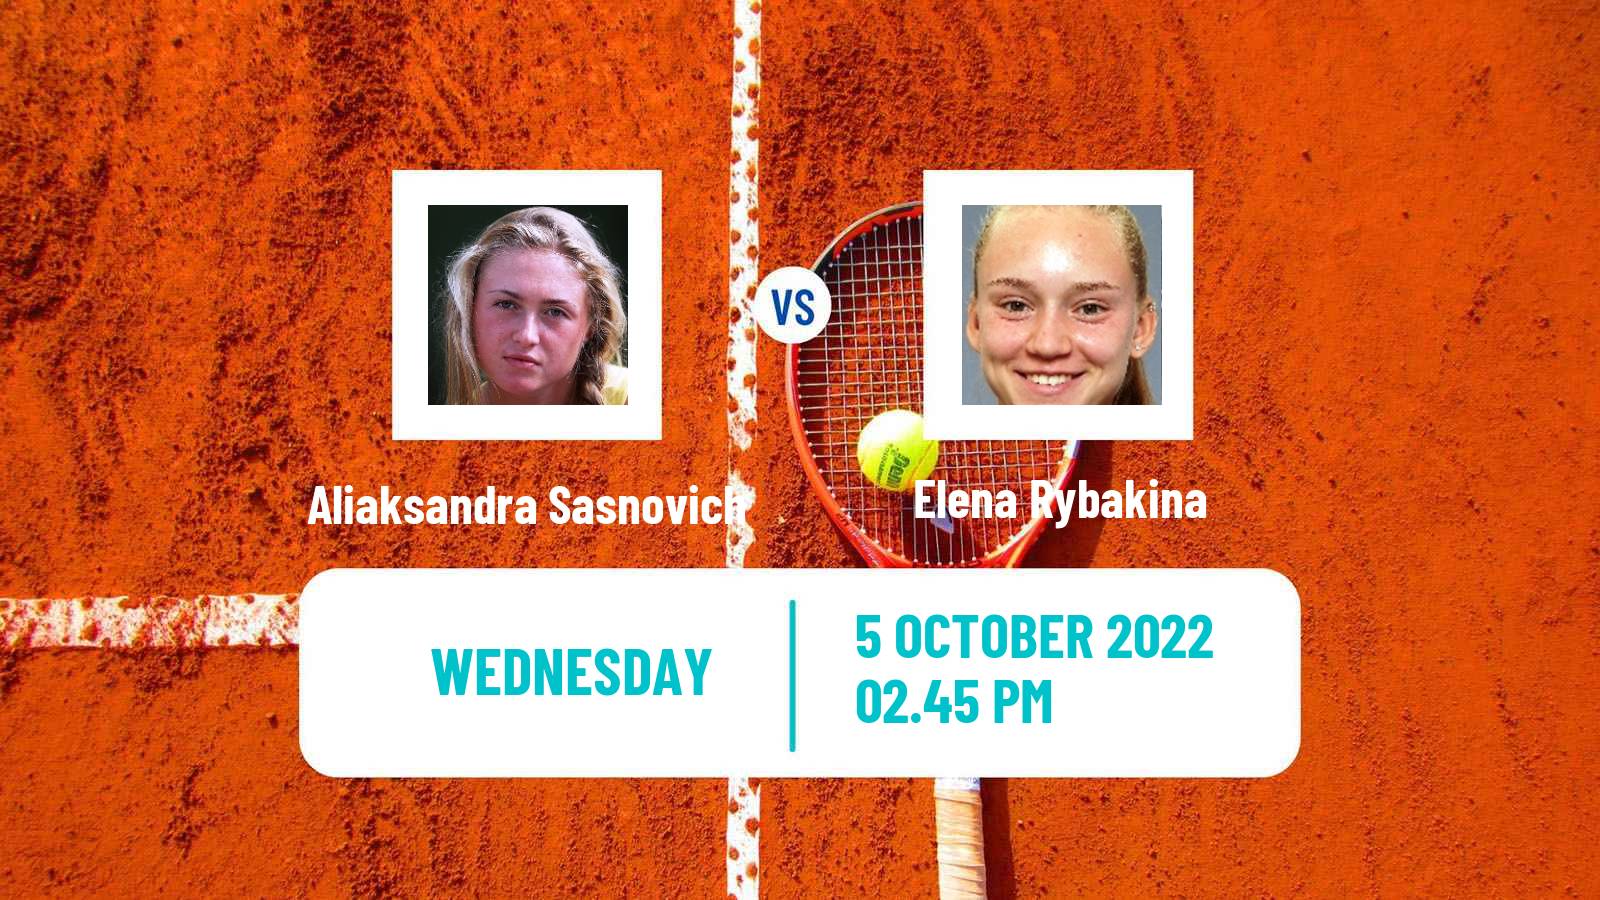 Tennis WTA Ostrava Aliaksandra Sasnovich - Elena Rybakina